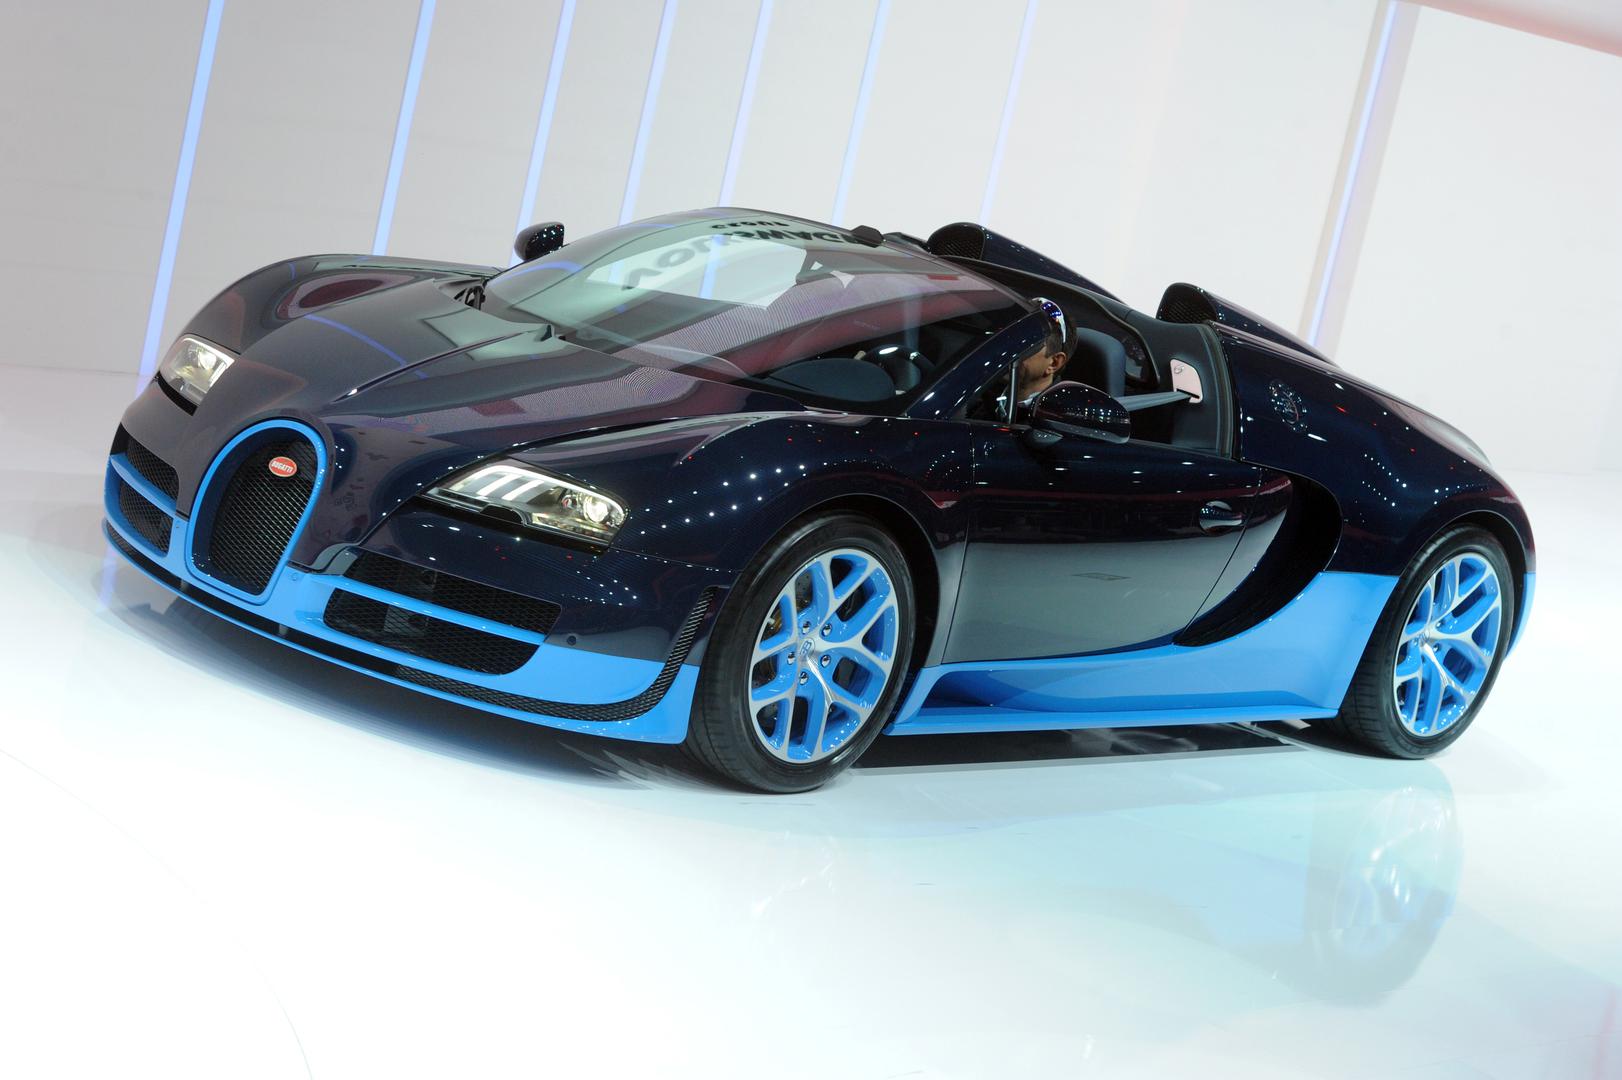 Cristiano Ronaldo - Bugatti Veyron - 13 milijuna kuna